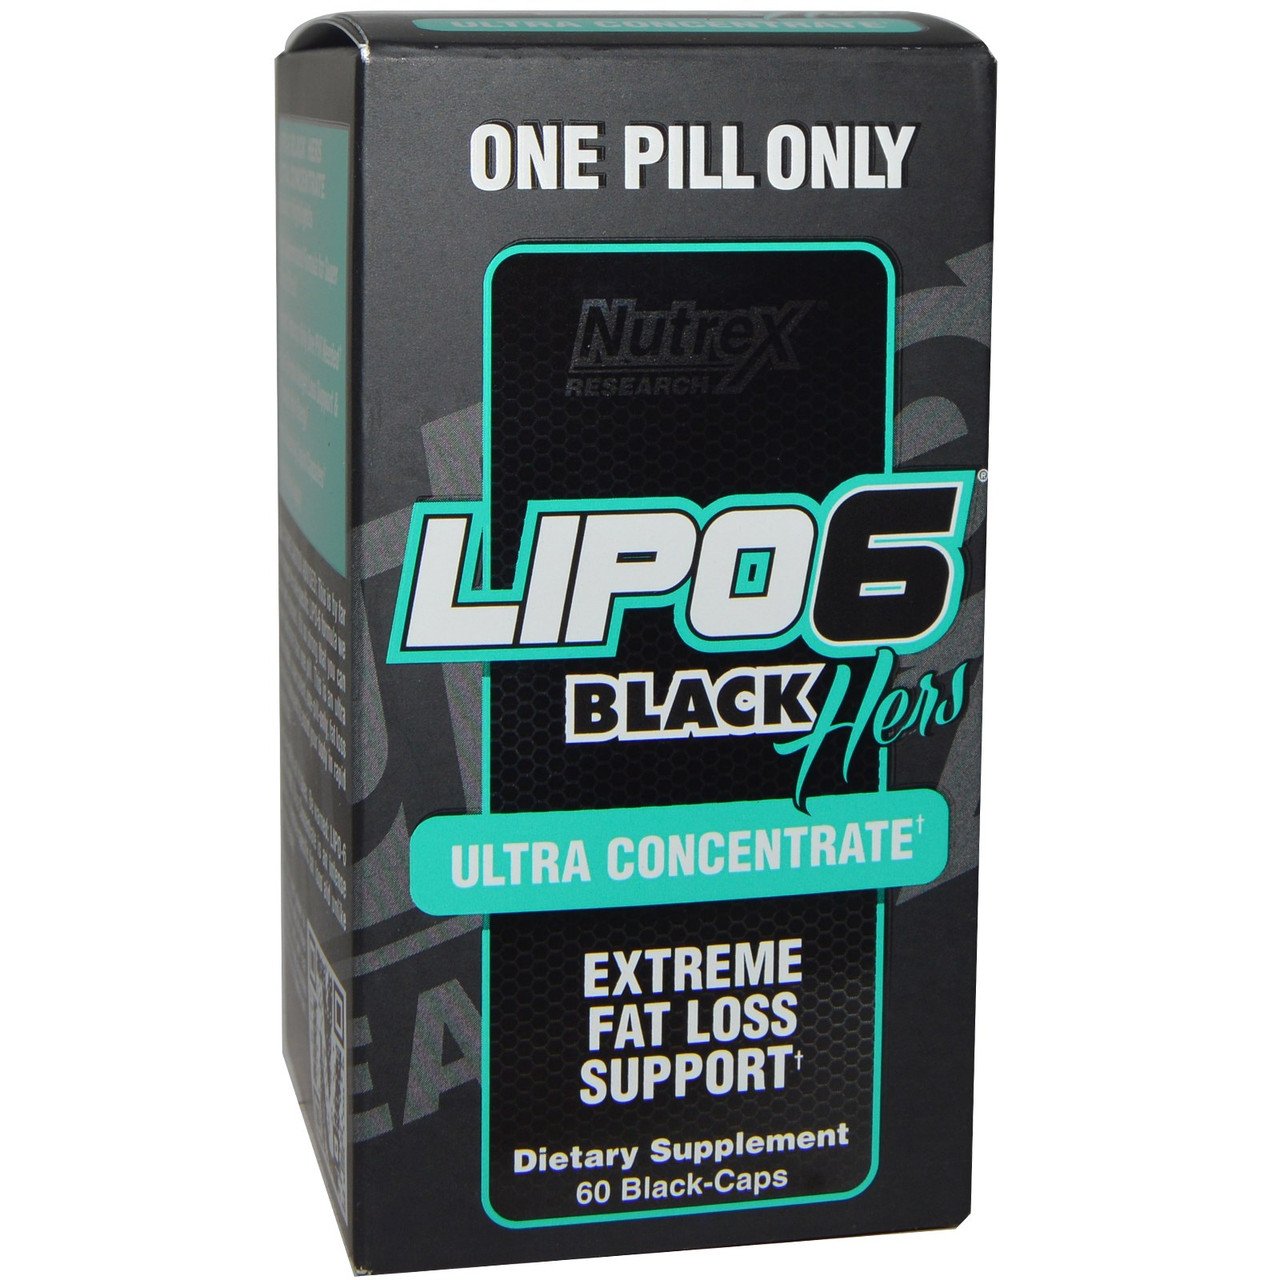 Lipo-6 Black Hers Ultra Concentrate Nutrex 60 Black-Caps ,  ml, Nutrex Research. Quemador de grasa. Weight Loss Fat burning 